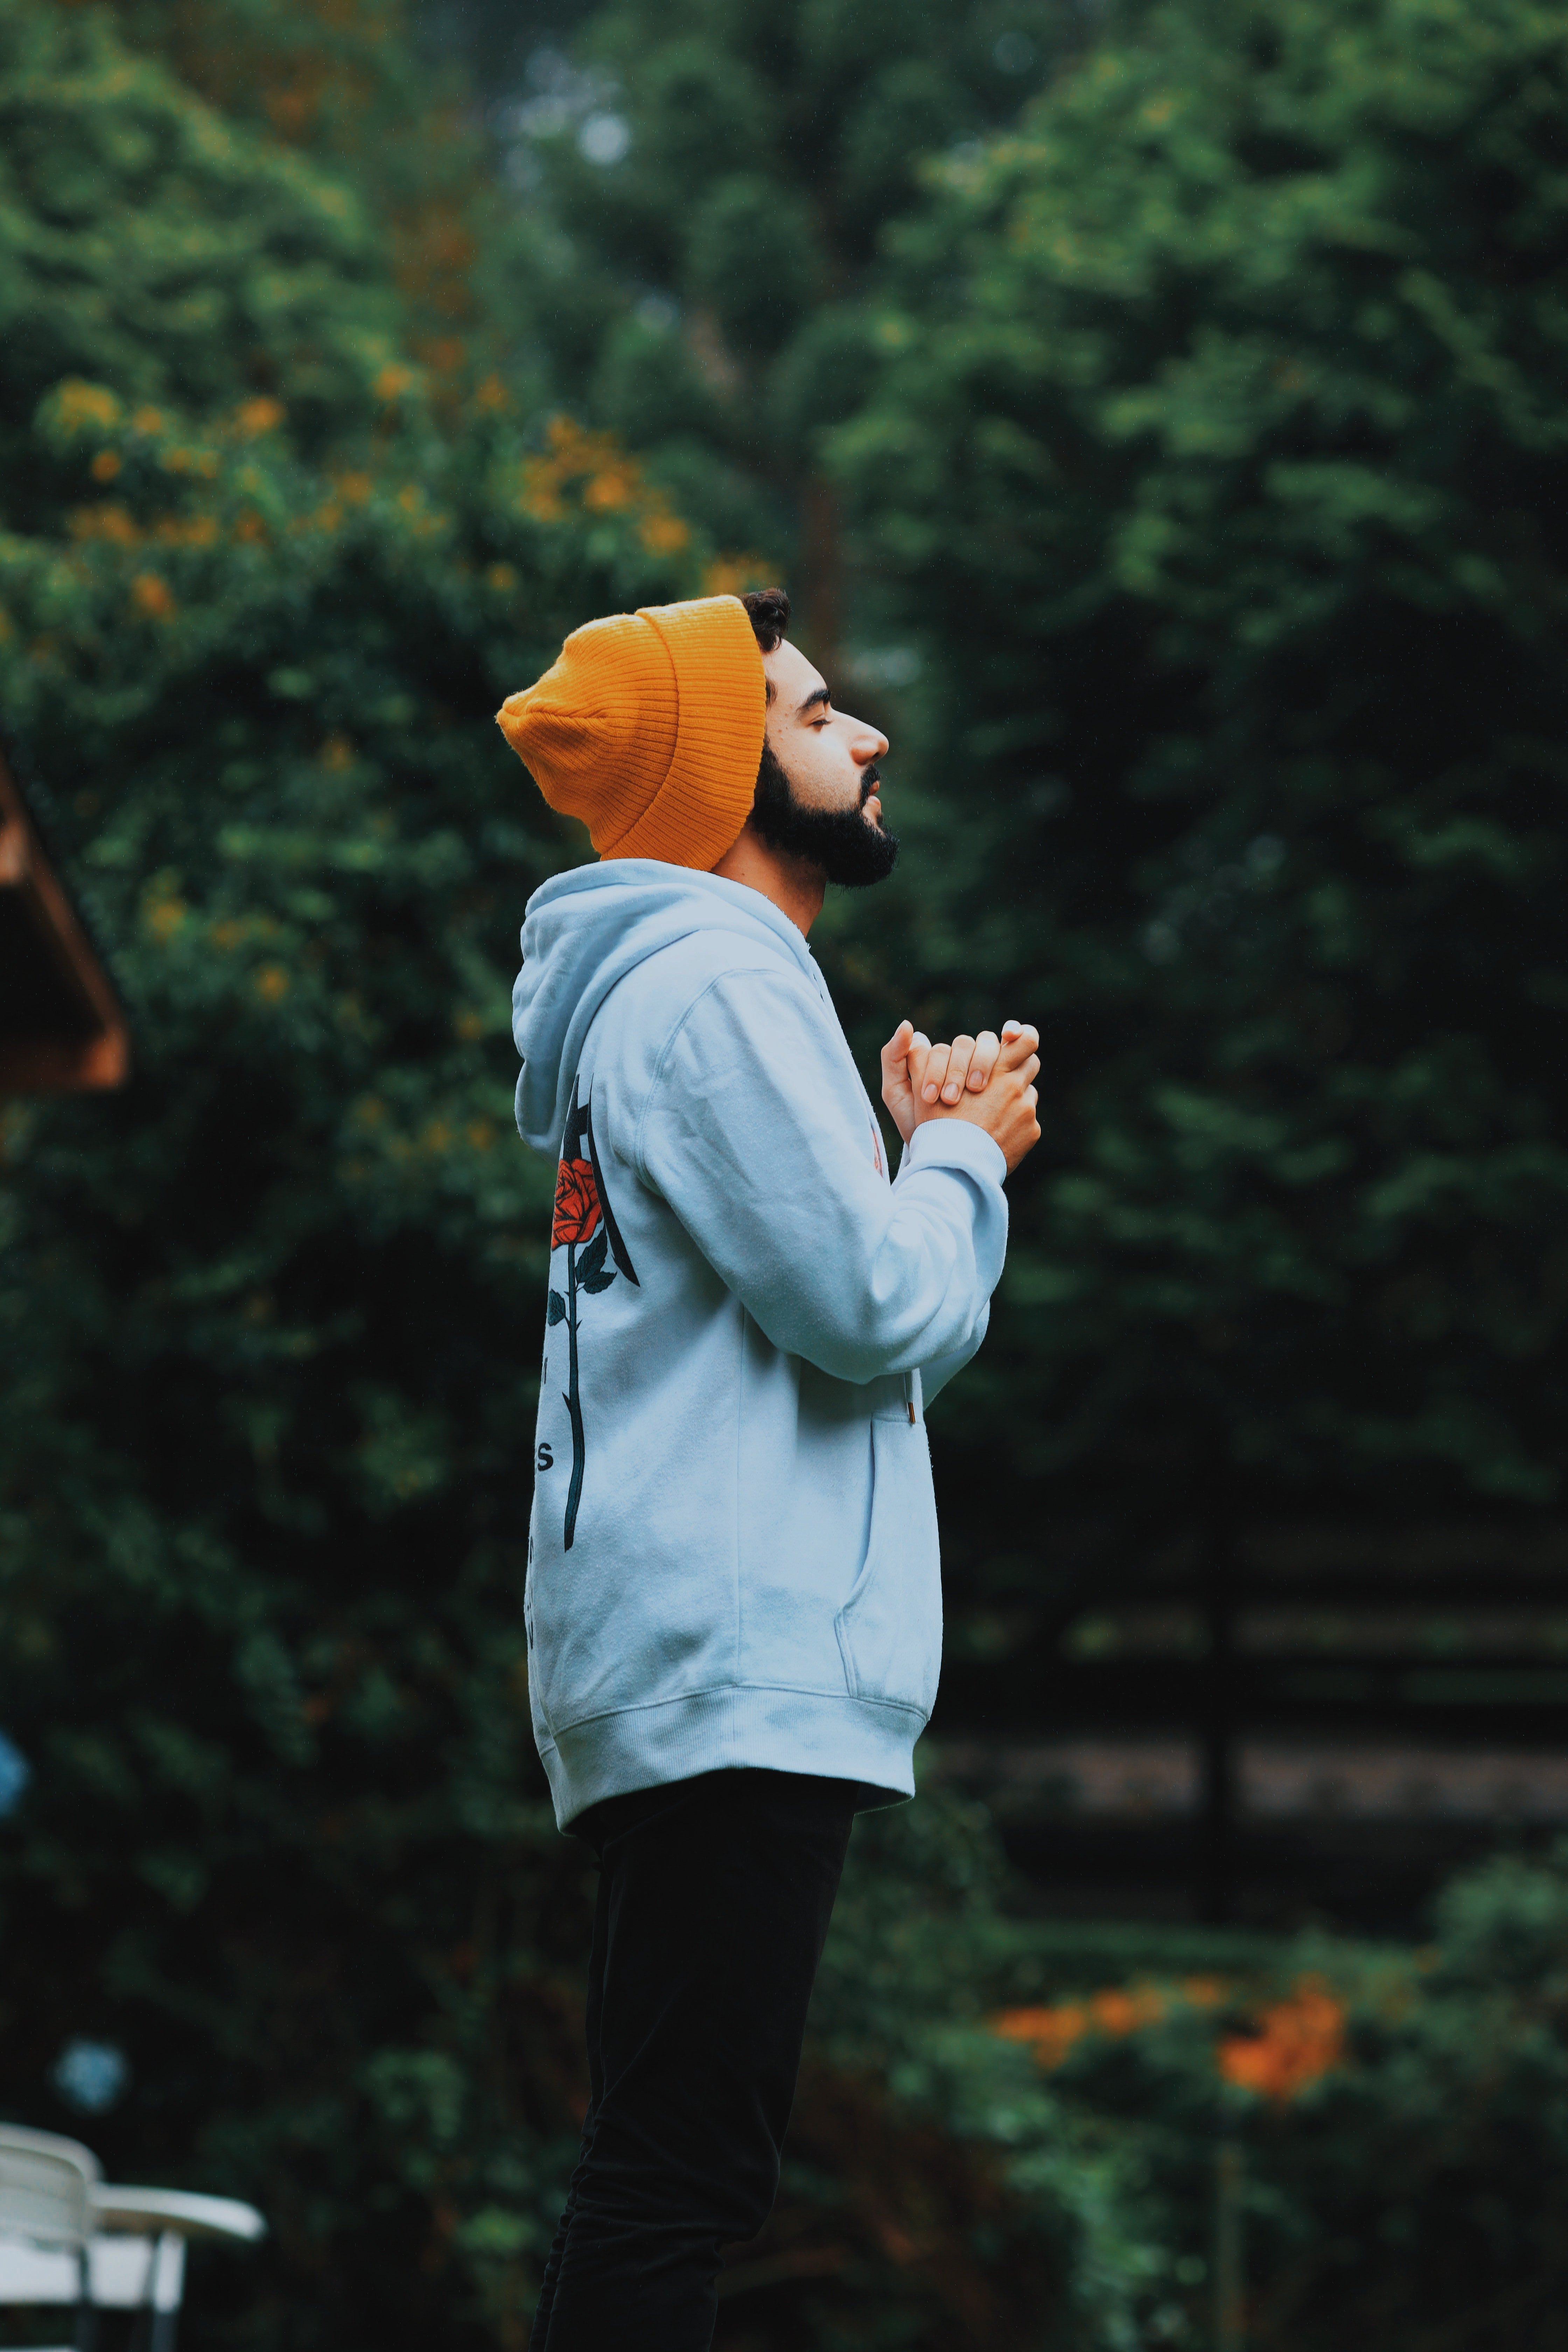 A man praying outdoors | Source: Pexels.com